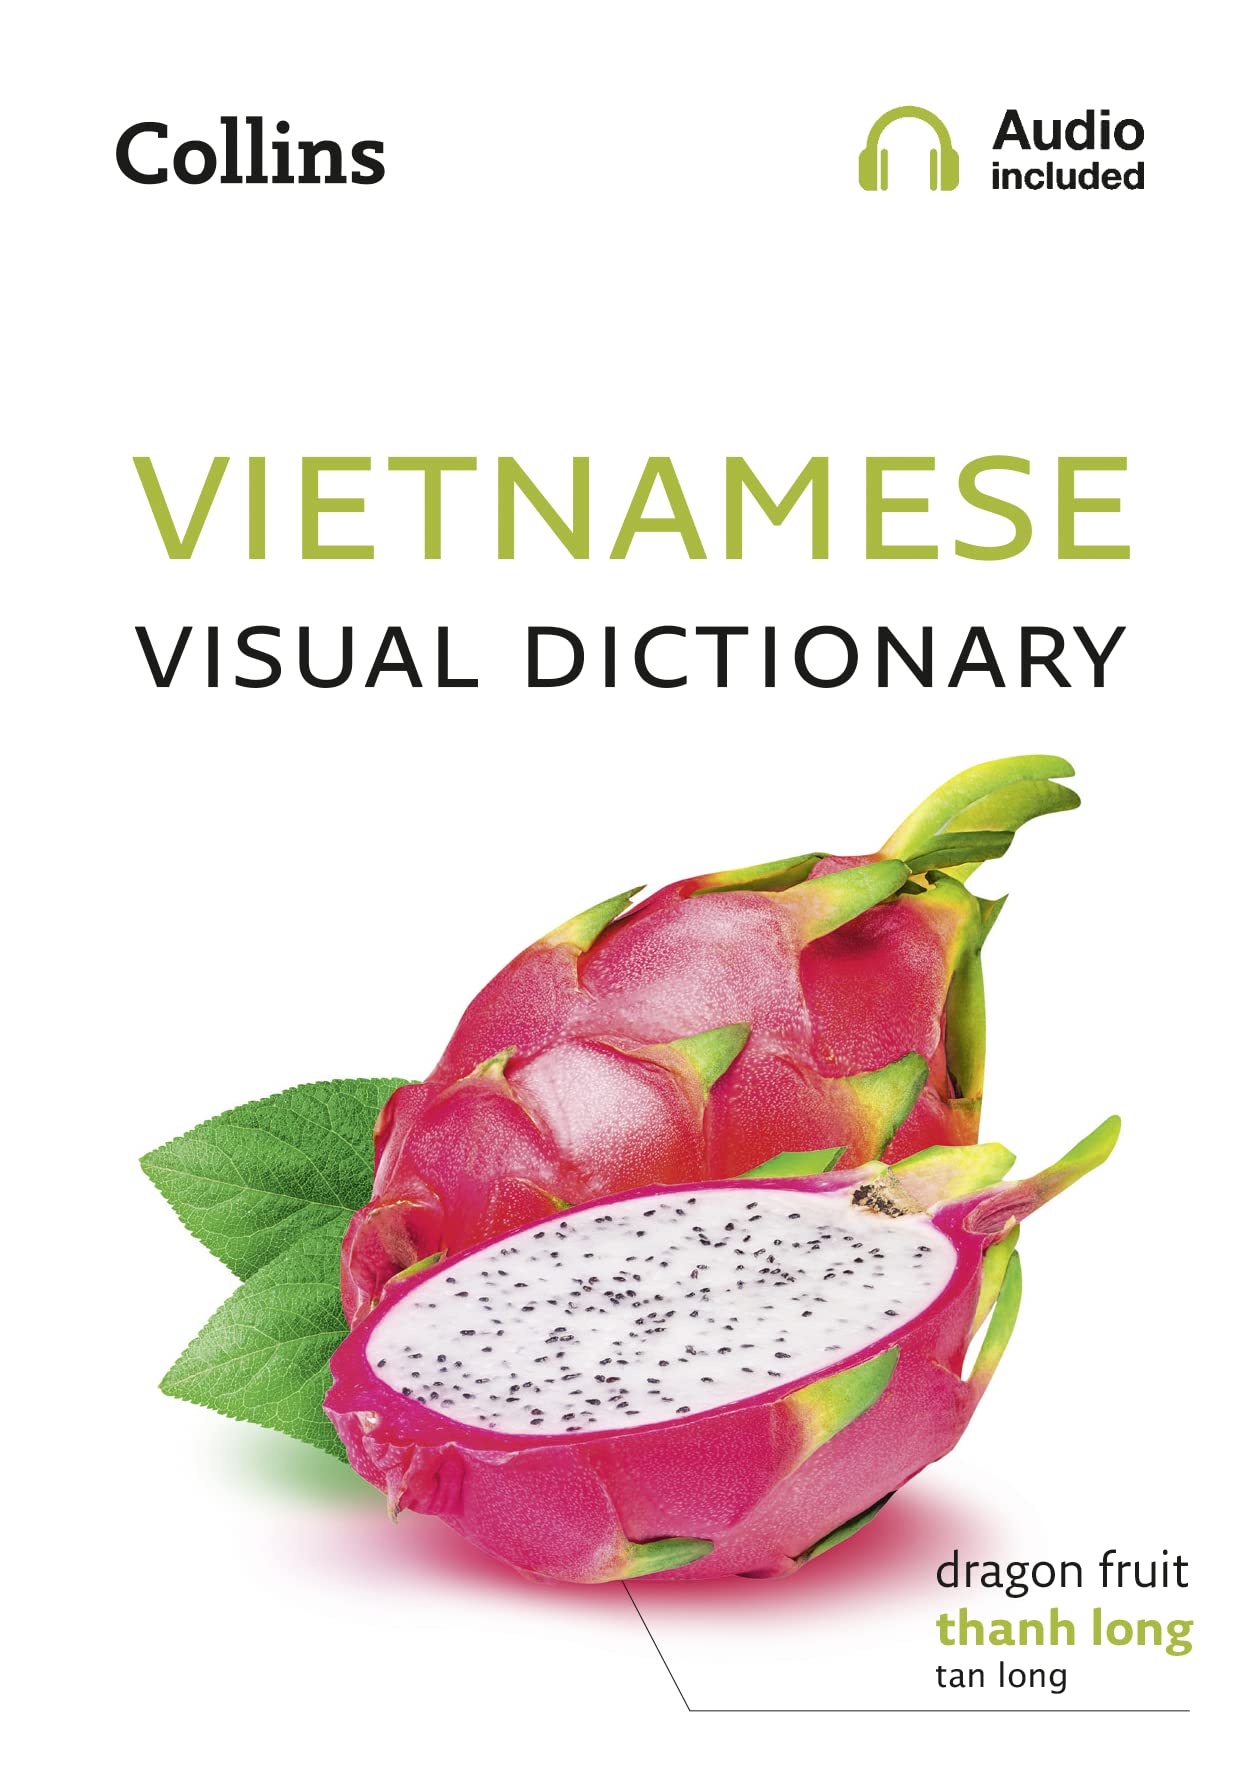 Collins Visual Dictionary: Vietnamese